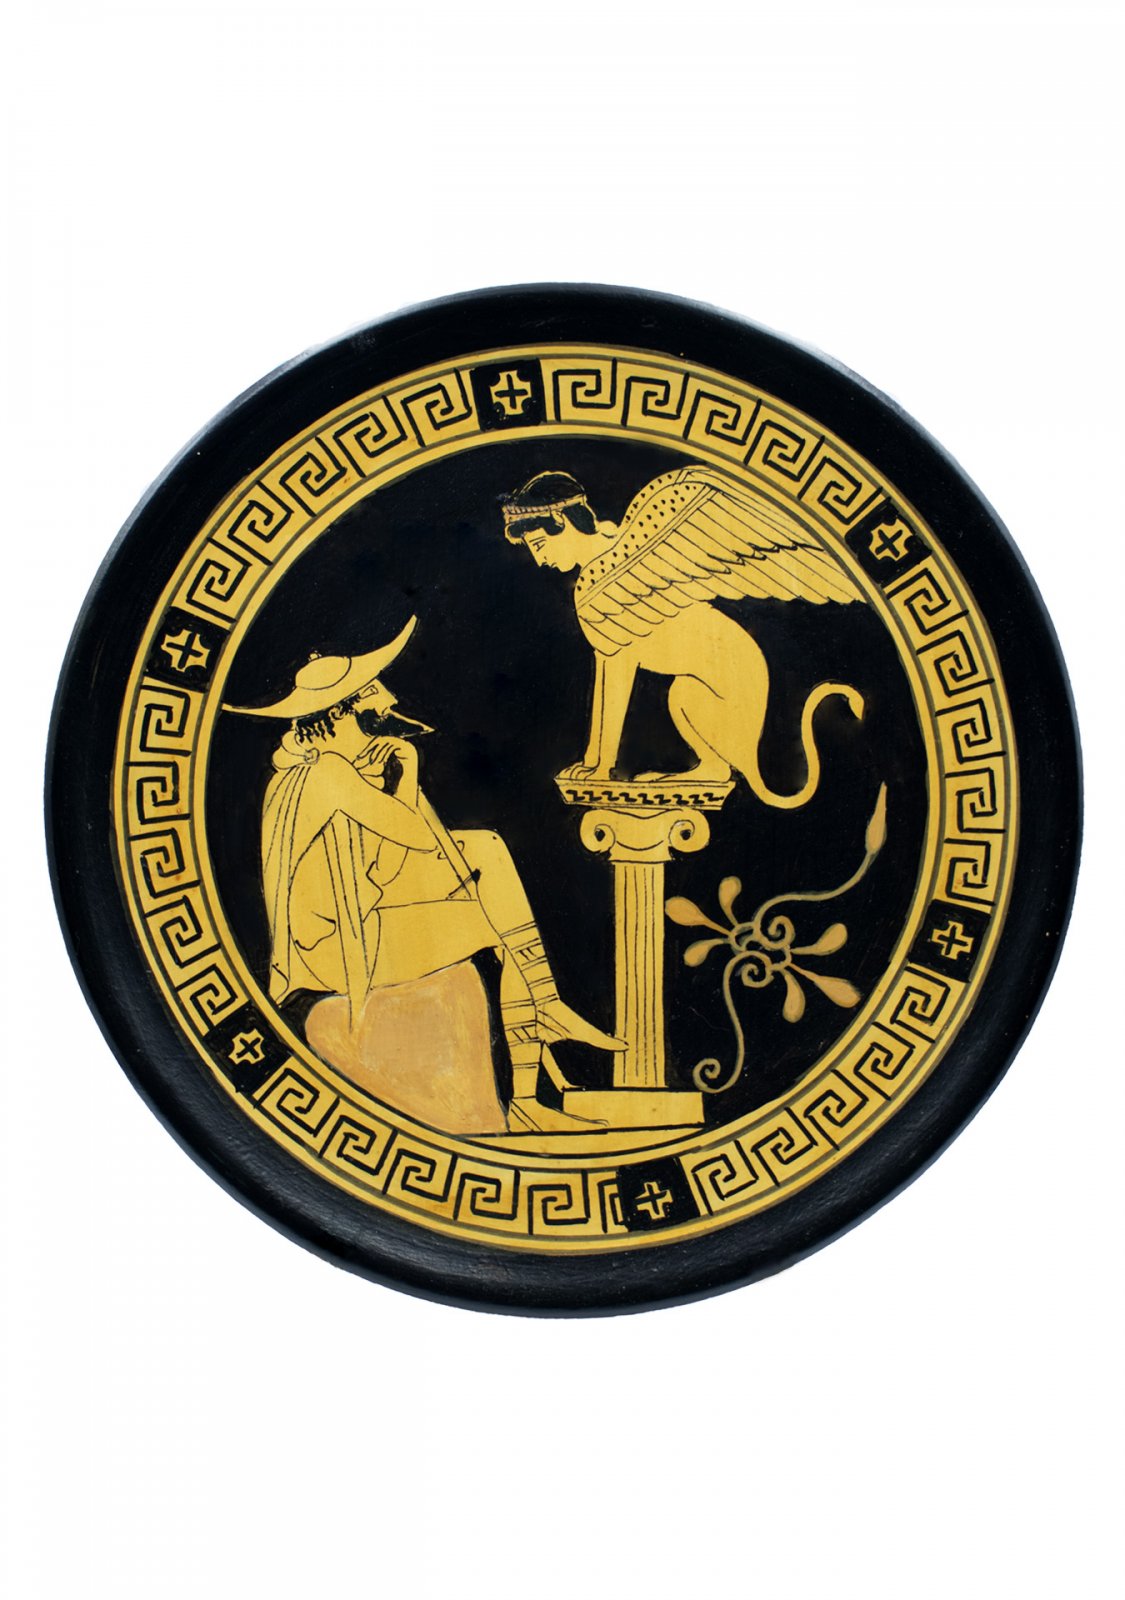 Classical Greek ceramic plate depicting Oedipus and Sphinx